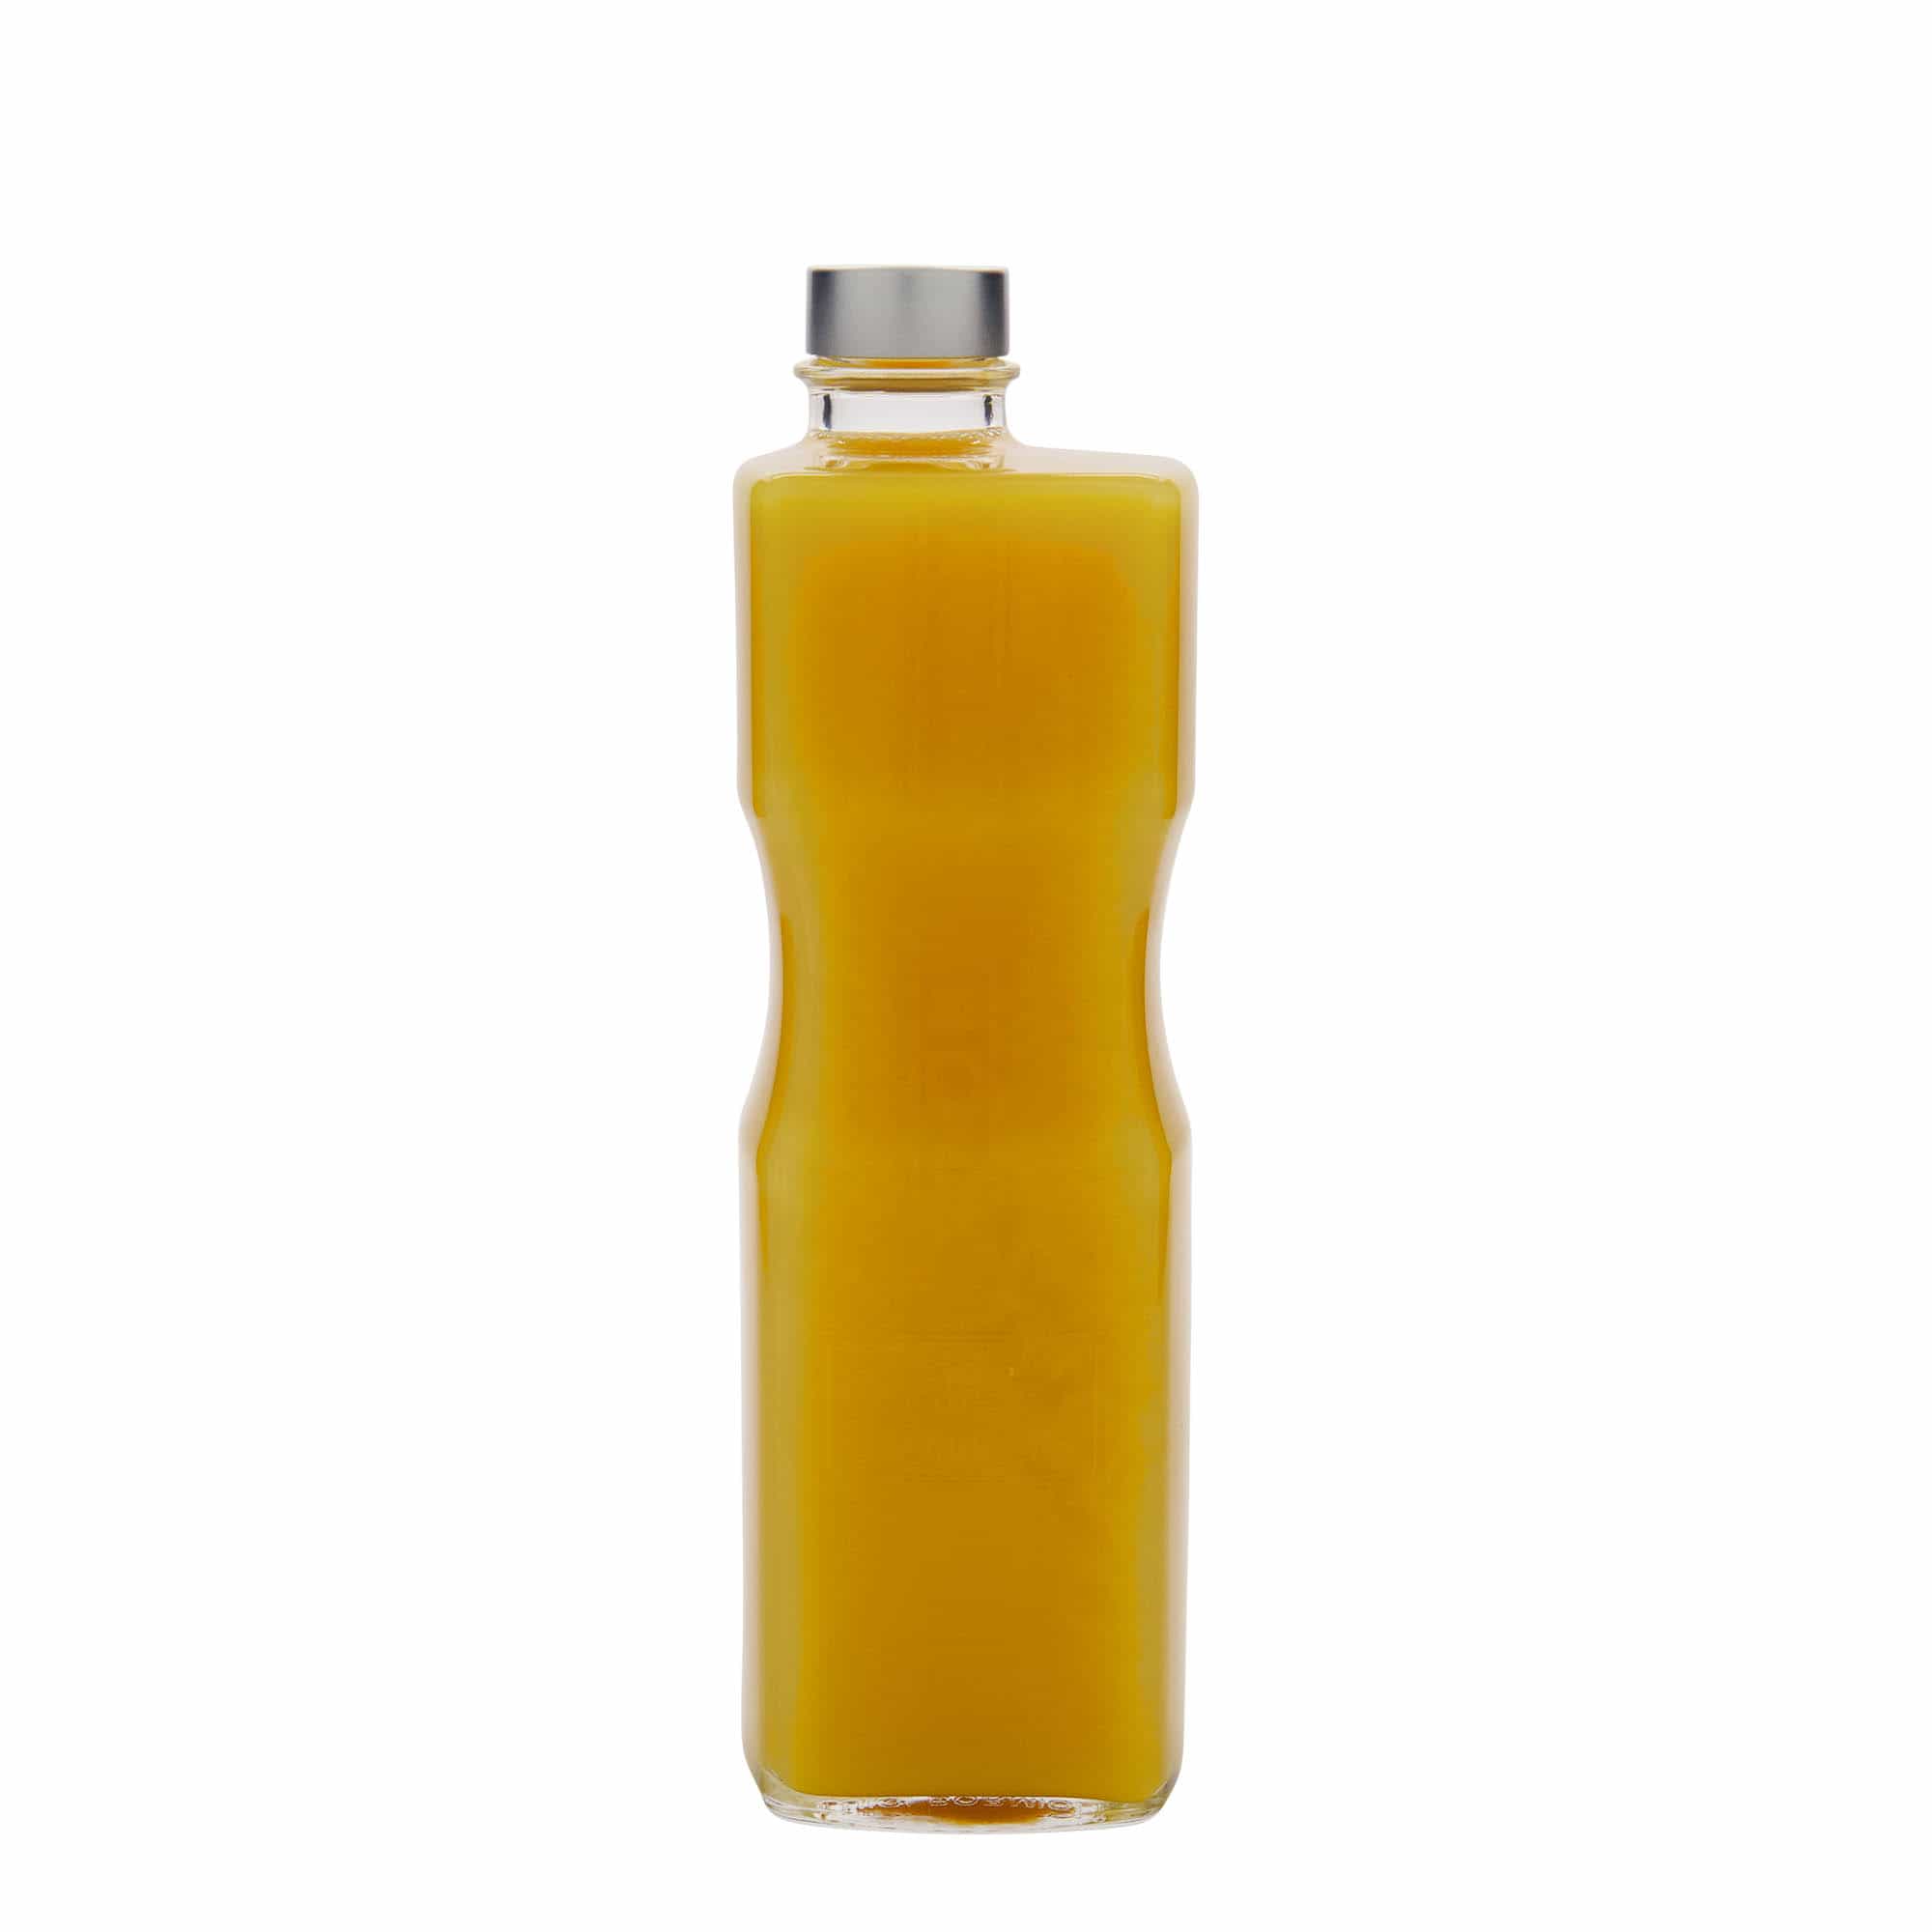 1,000 ml glass bottle 'Optima Juice', rectangular, closure: screw cap